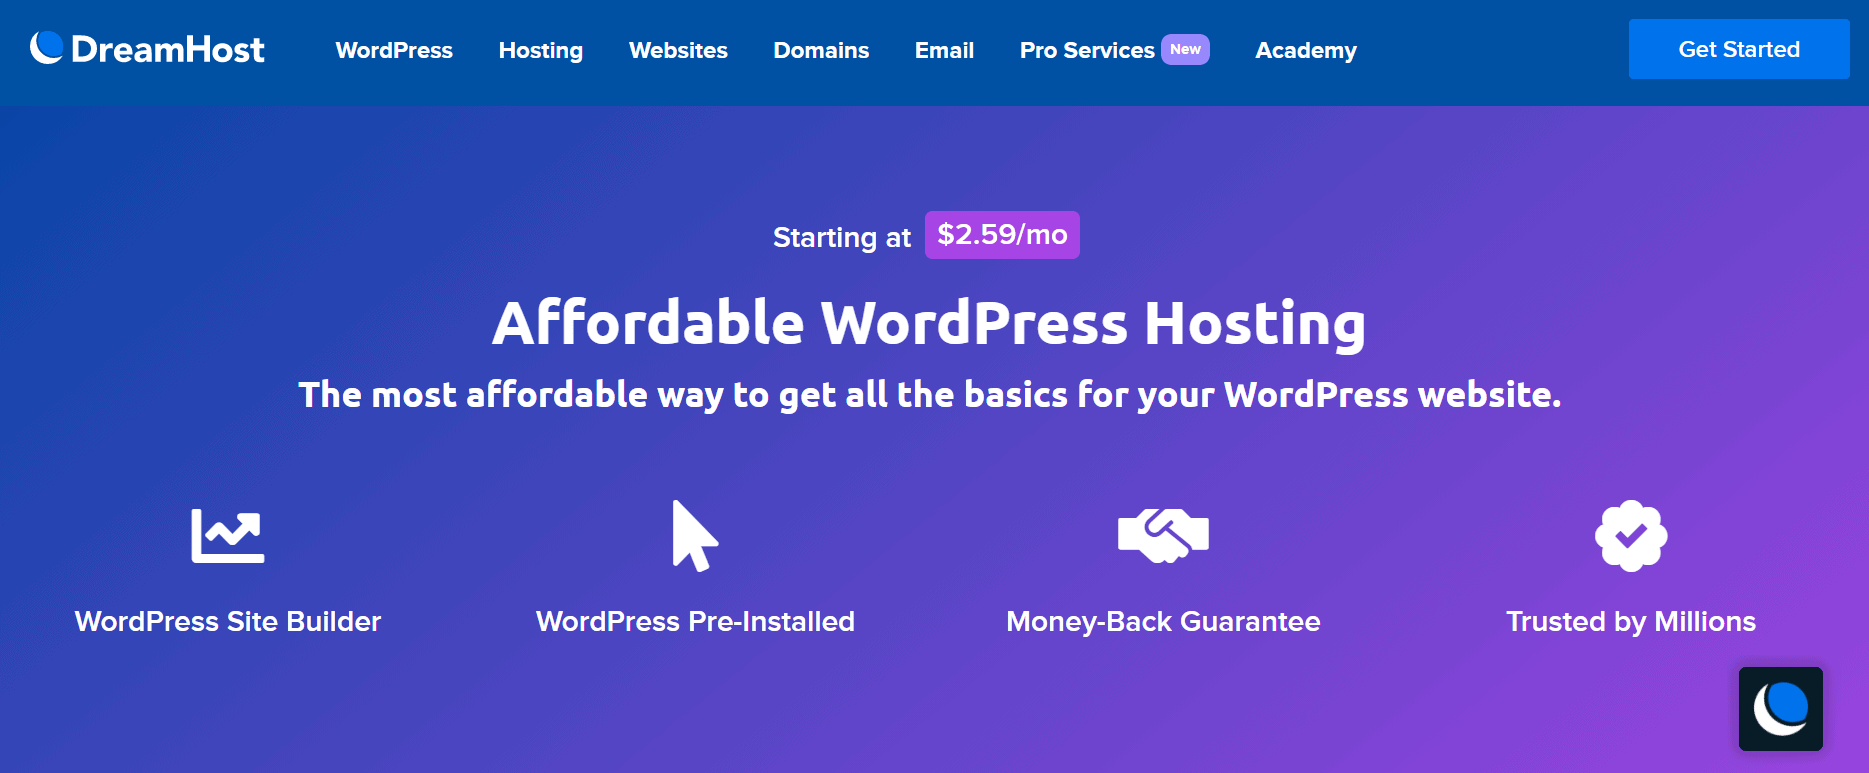 best wordpress hosting - dreamhost